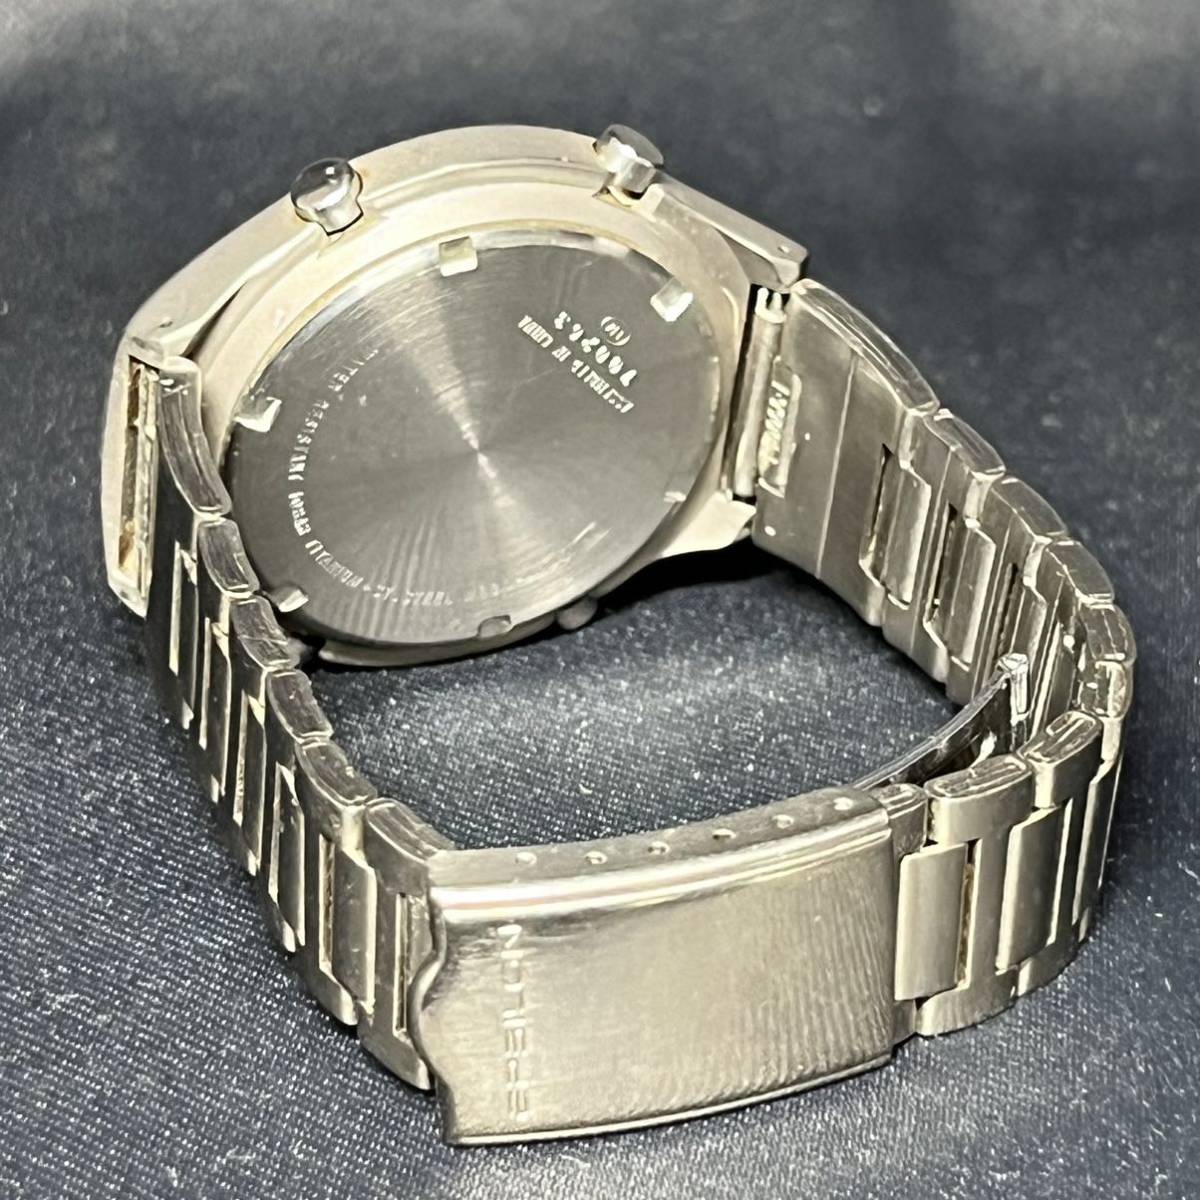 SEIKO ALBA セイコー アルバ EPSILON イプシロン メンズ腕時計 W820 